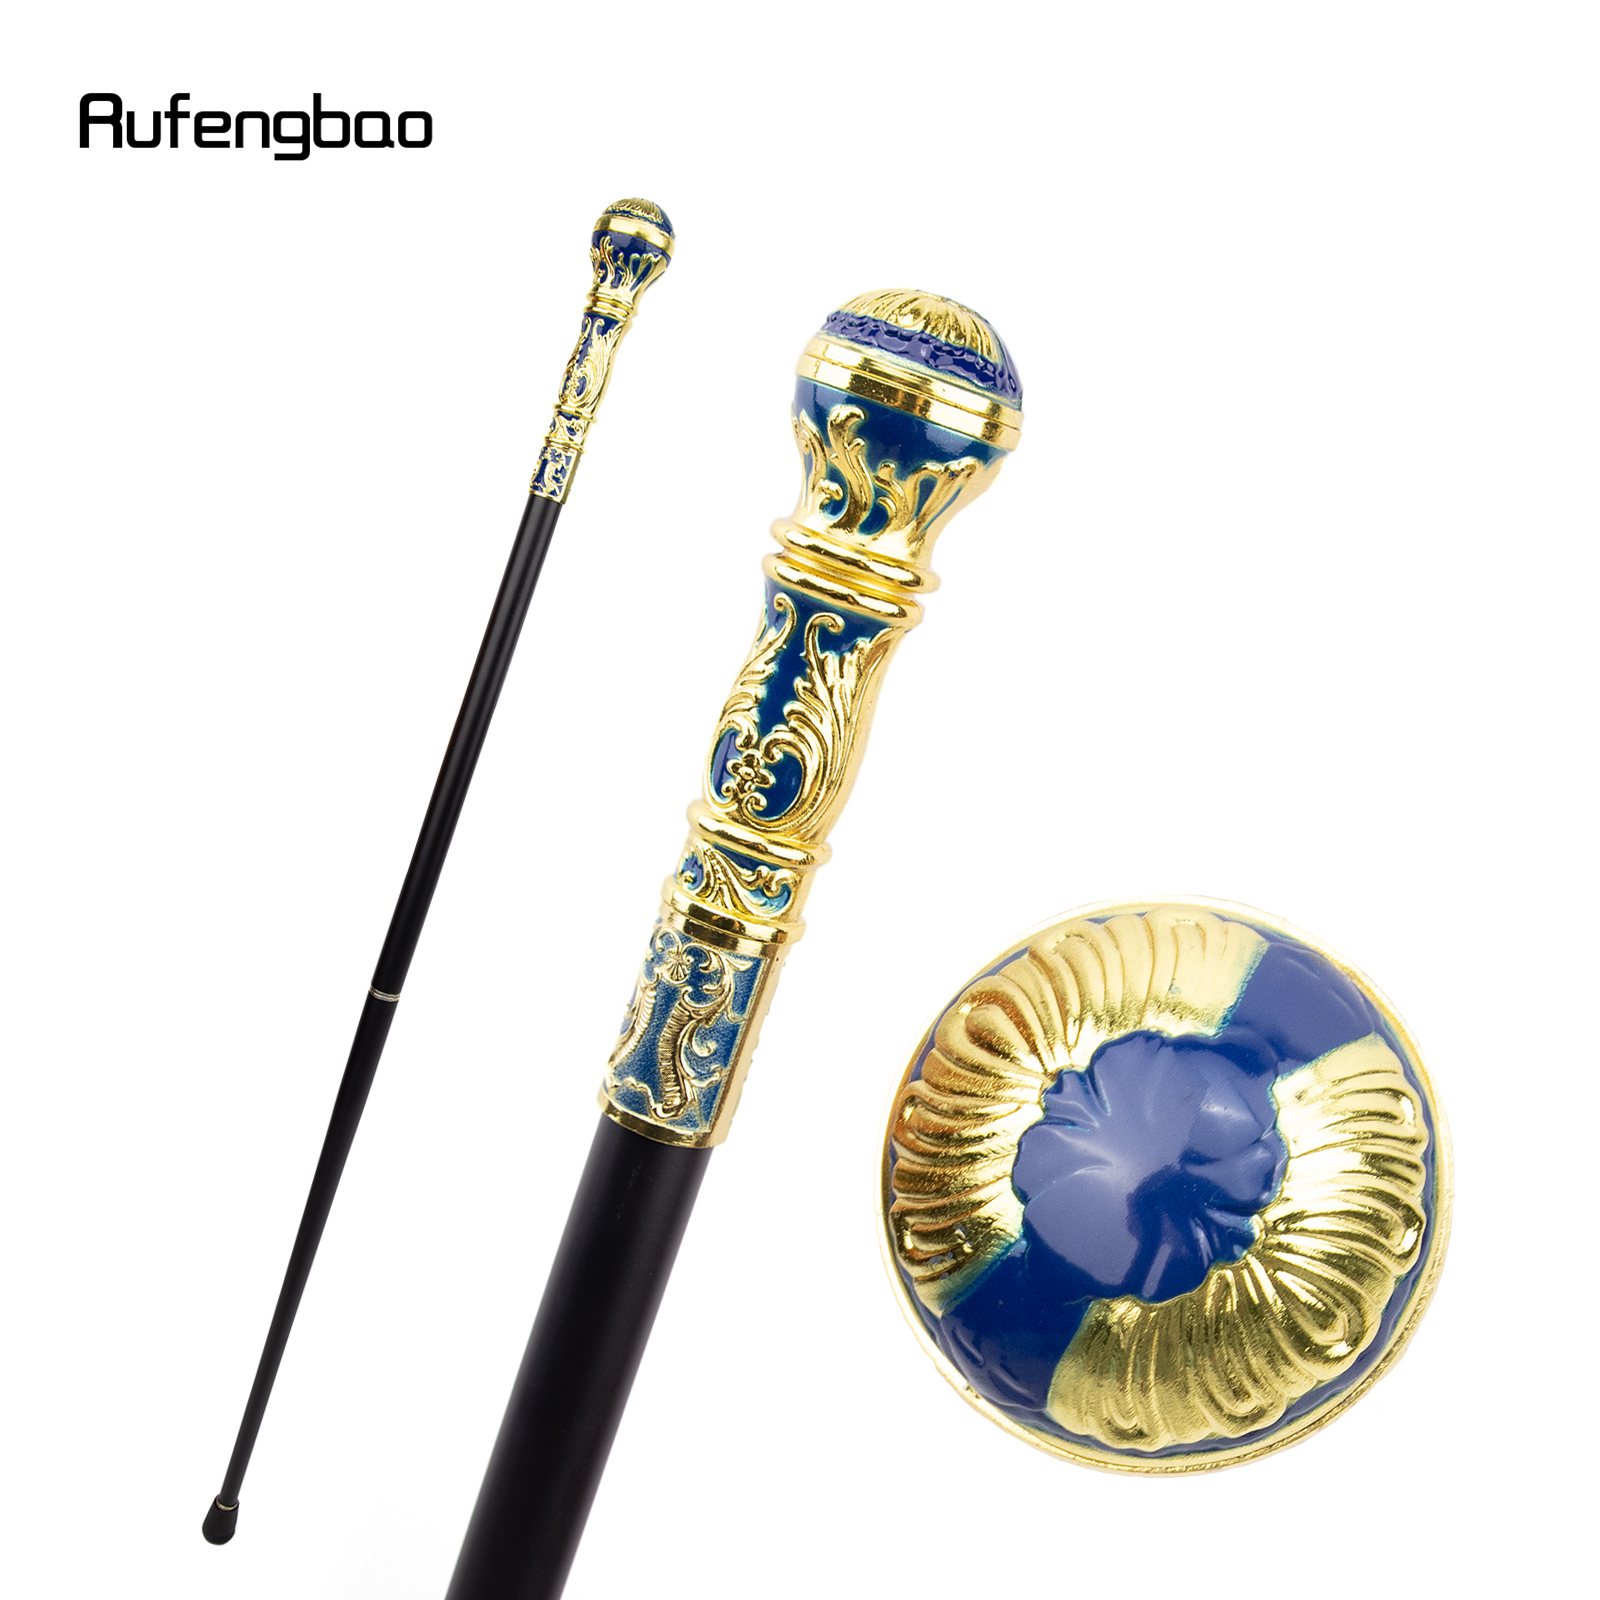 

Golden Blue Luxury Round Handle Fashion Walking Stick For Party Decorative Walking Cane Elegant Crosier Knob Walking Stick 93cm/36.6in